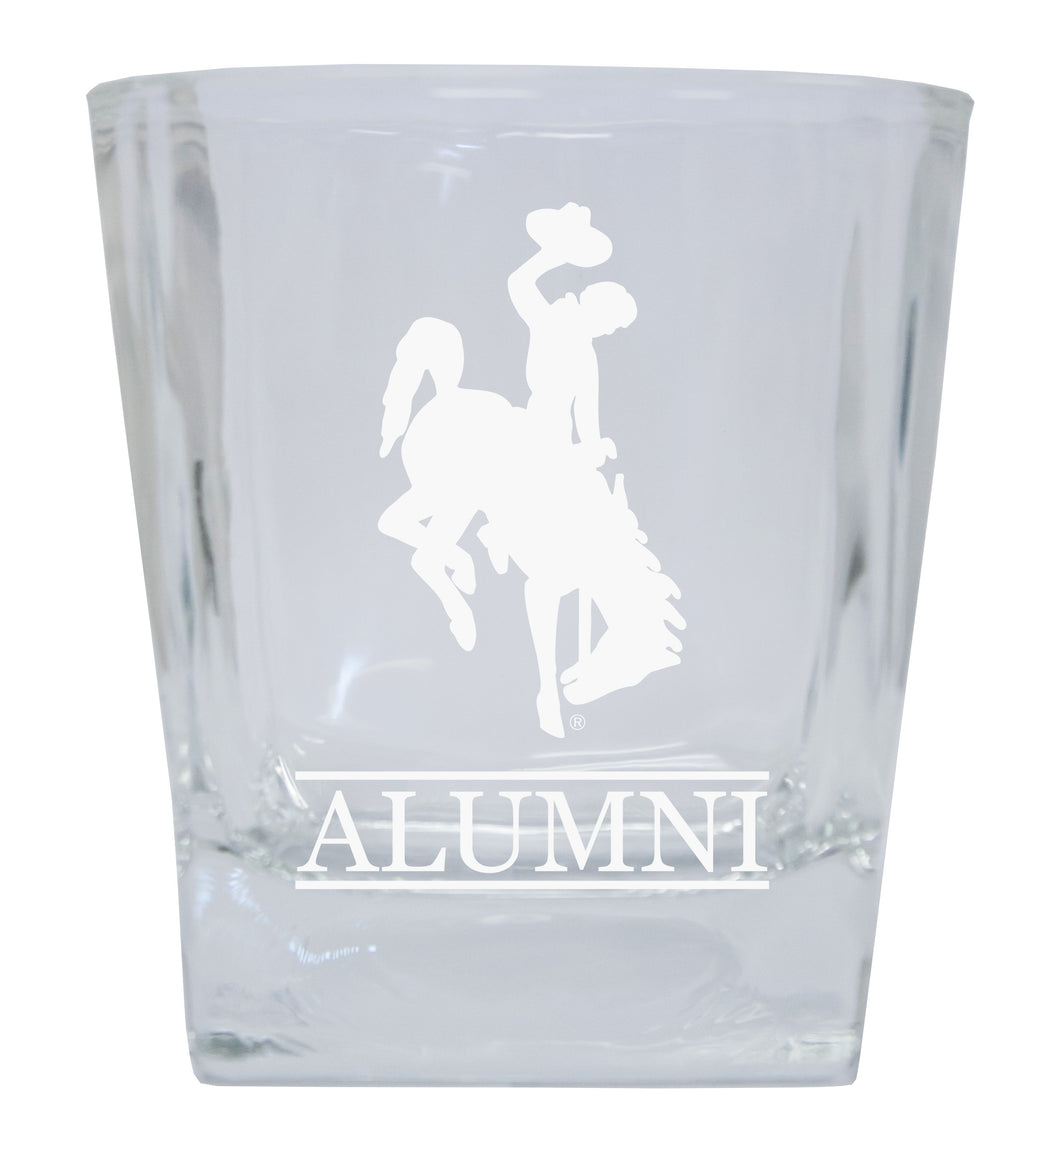 University of Wyoming Alumni Elegance - 5 oz Etched Shooter Glass Tumbler